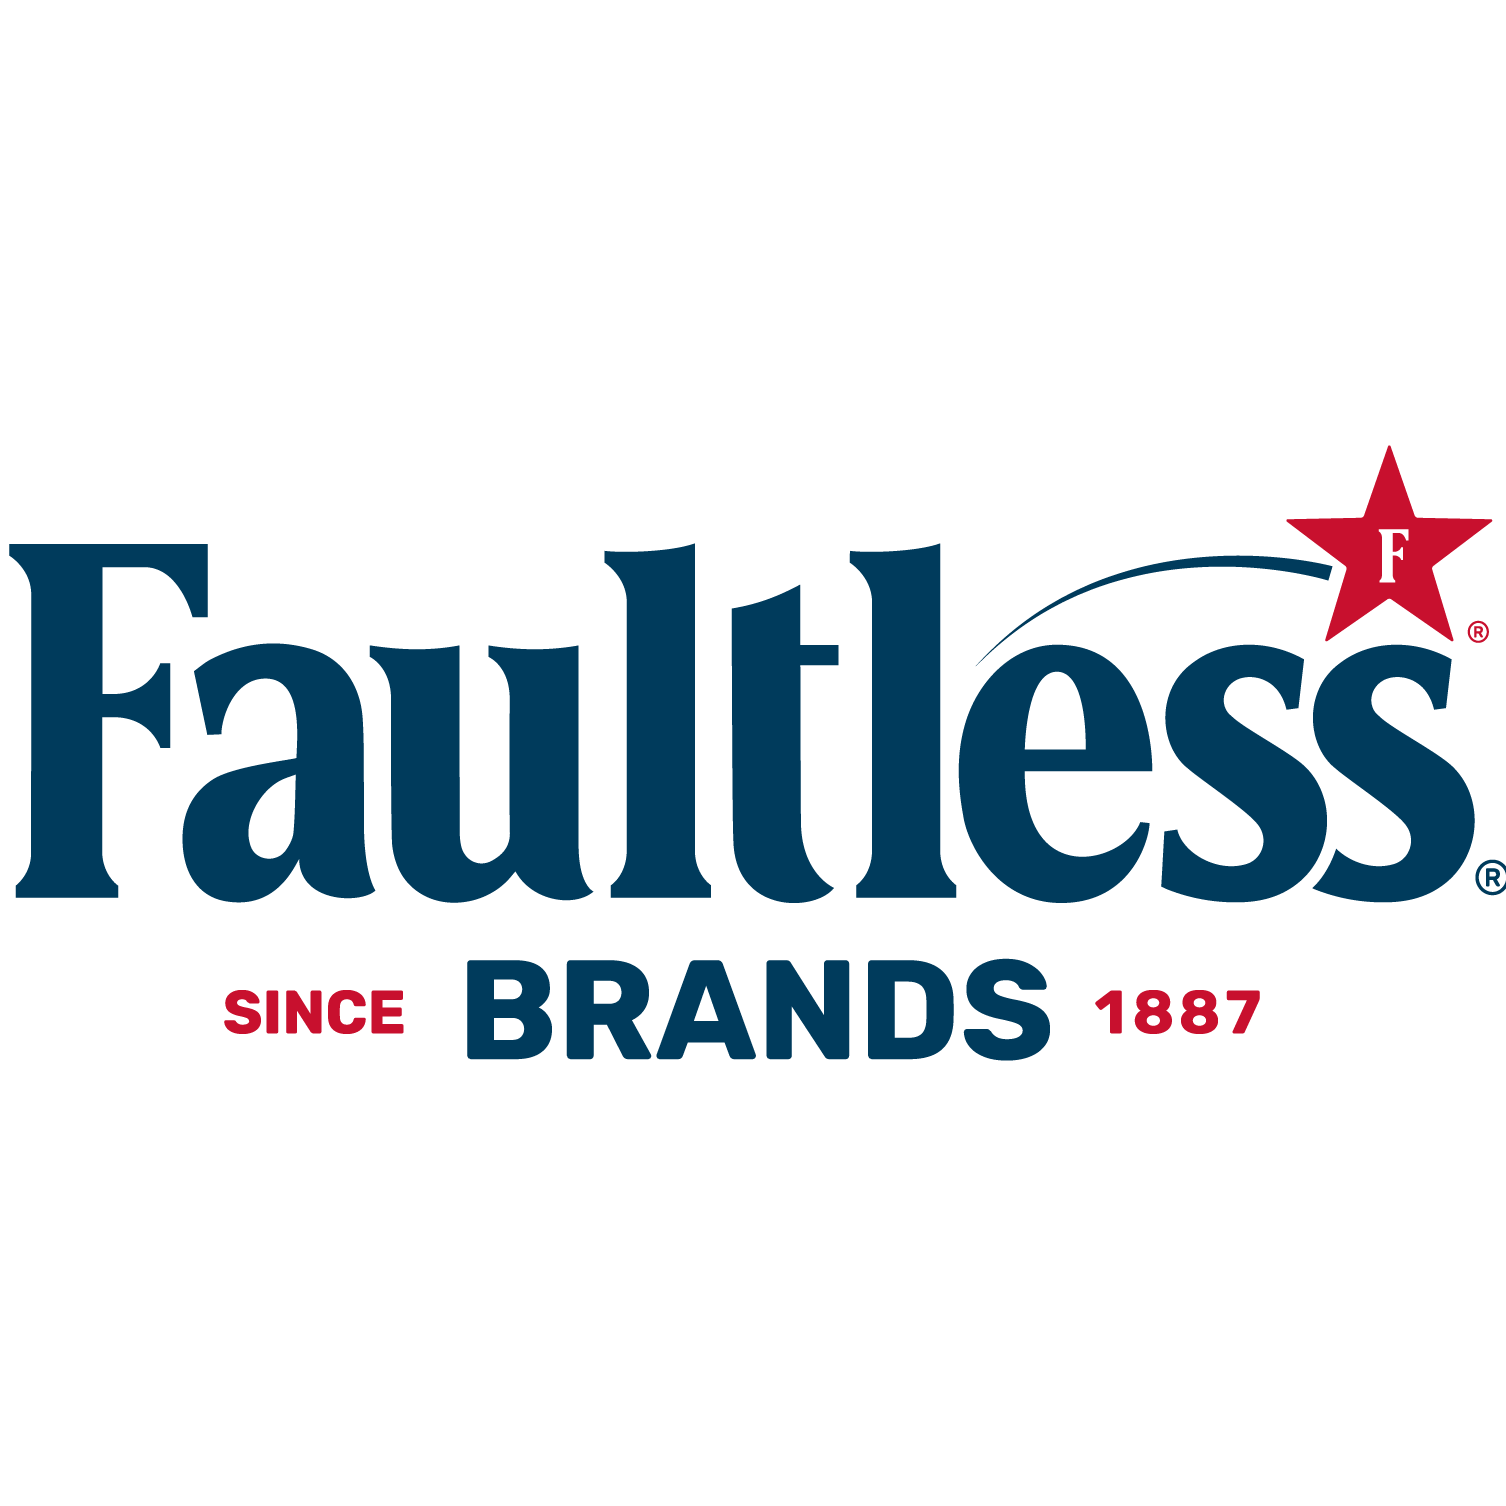 Faultless